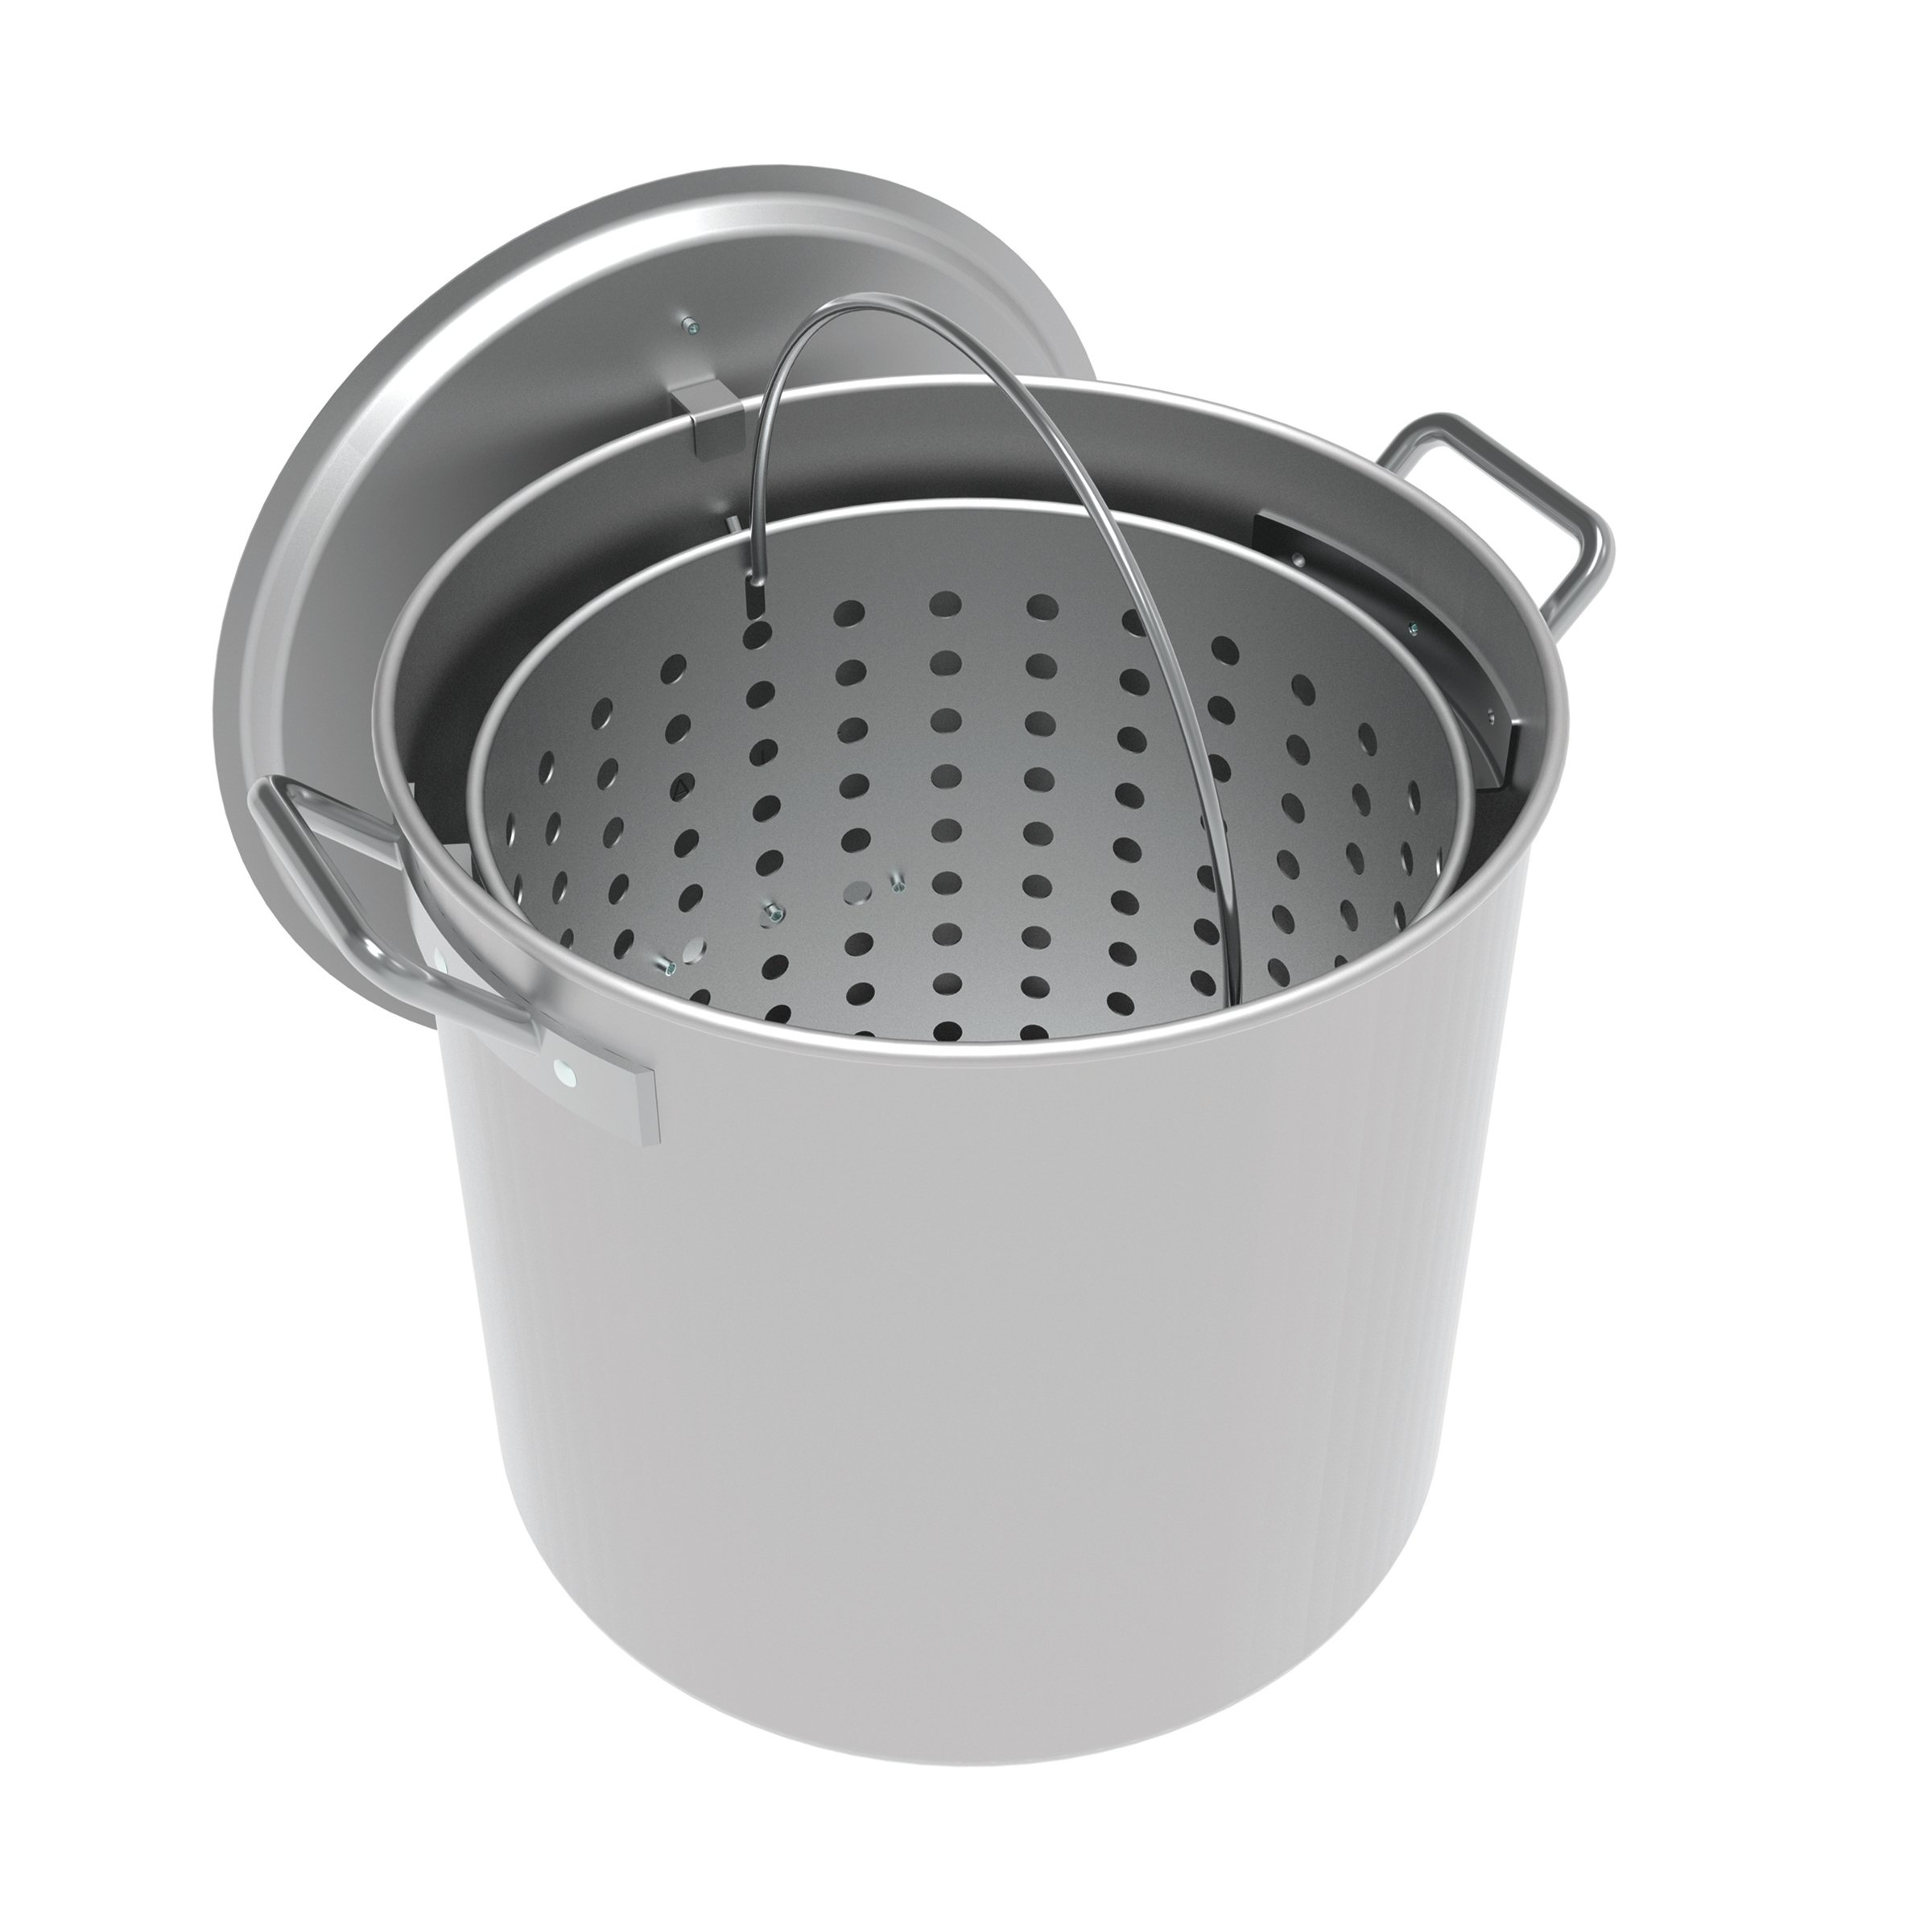 Loco Cookers Lcpt60 Aluminum Boiling Pot, 60 Quart, Silver